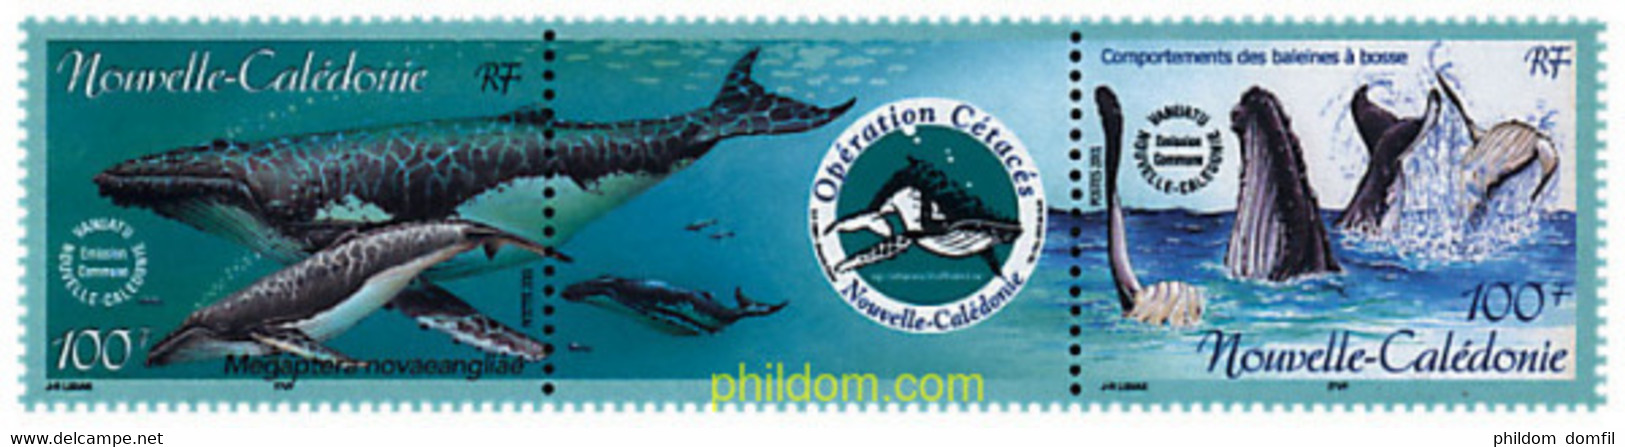 5405 MNH NUEVA CALEDONIA 2001 OPERACION CETACEOS - Used Stamps